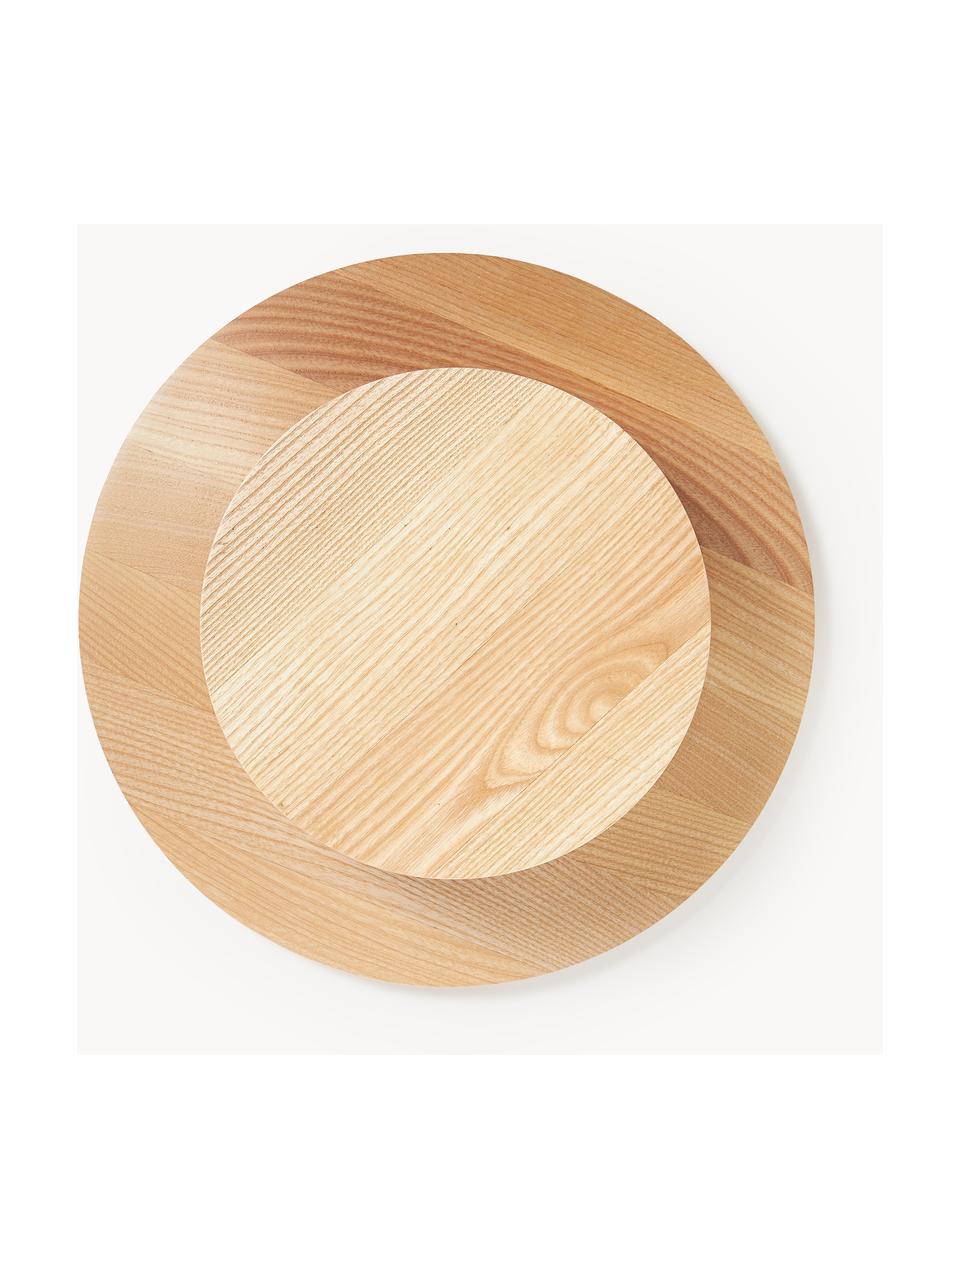 Deko-Tablett Keoni aus Eschenholz, Eschenholz, lackiert

Dieses Produkt wird aus nachhaltig gewonnenem, FSC®-zertifiziertem Holz gefertigt., Eschenholz, Ø 30 cm